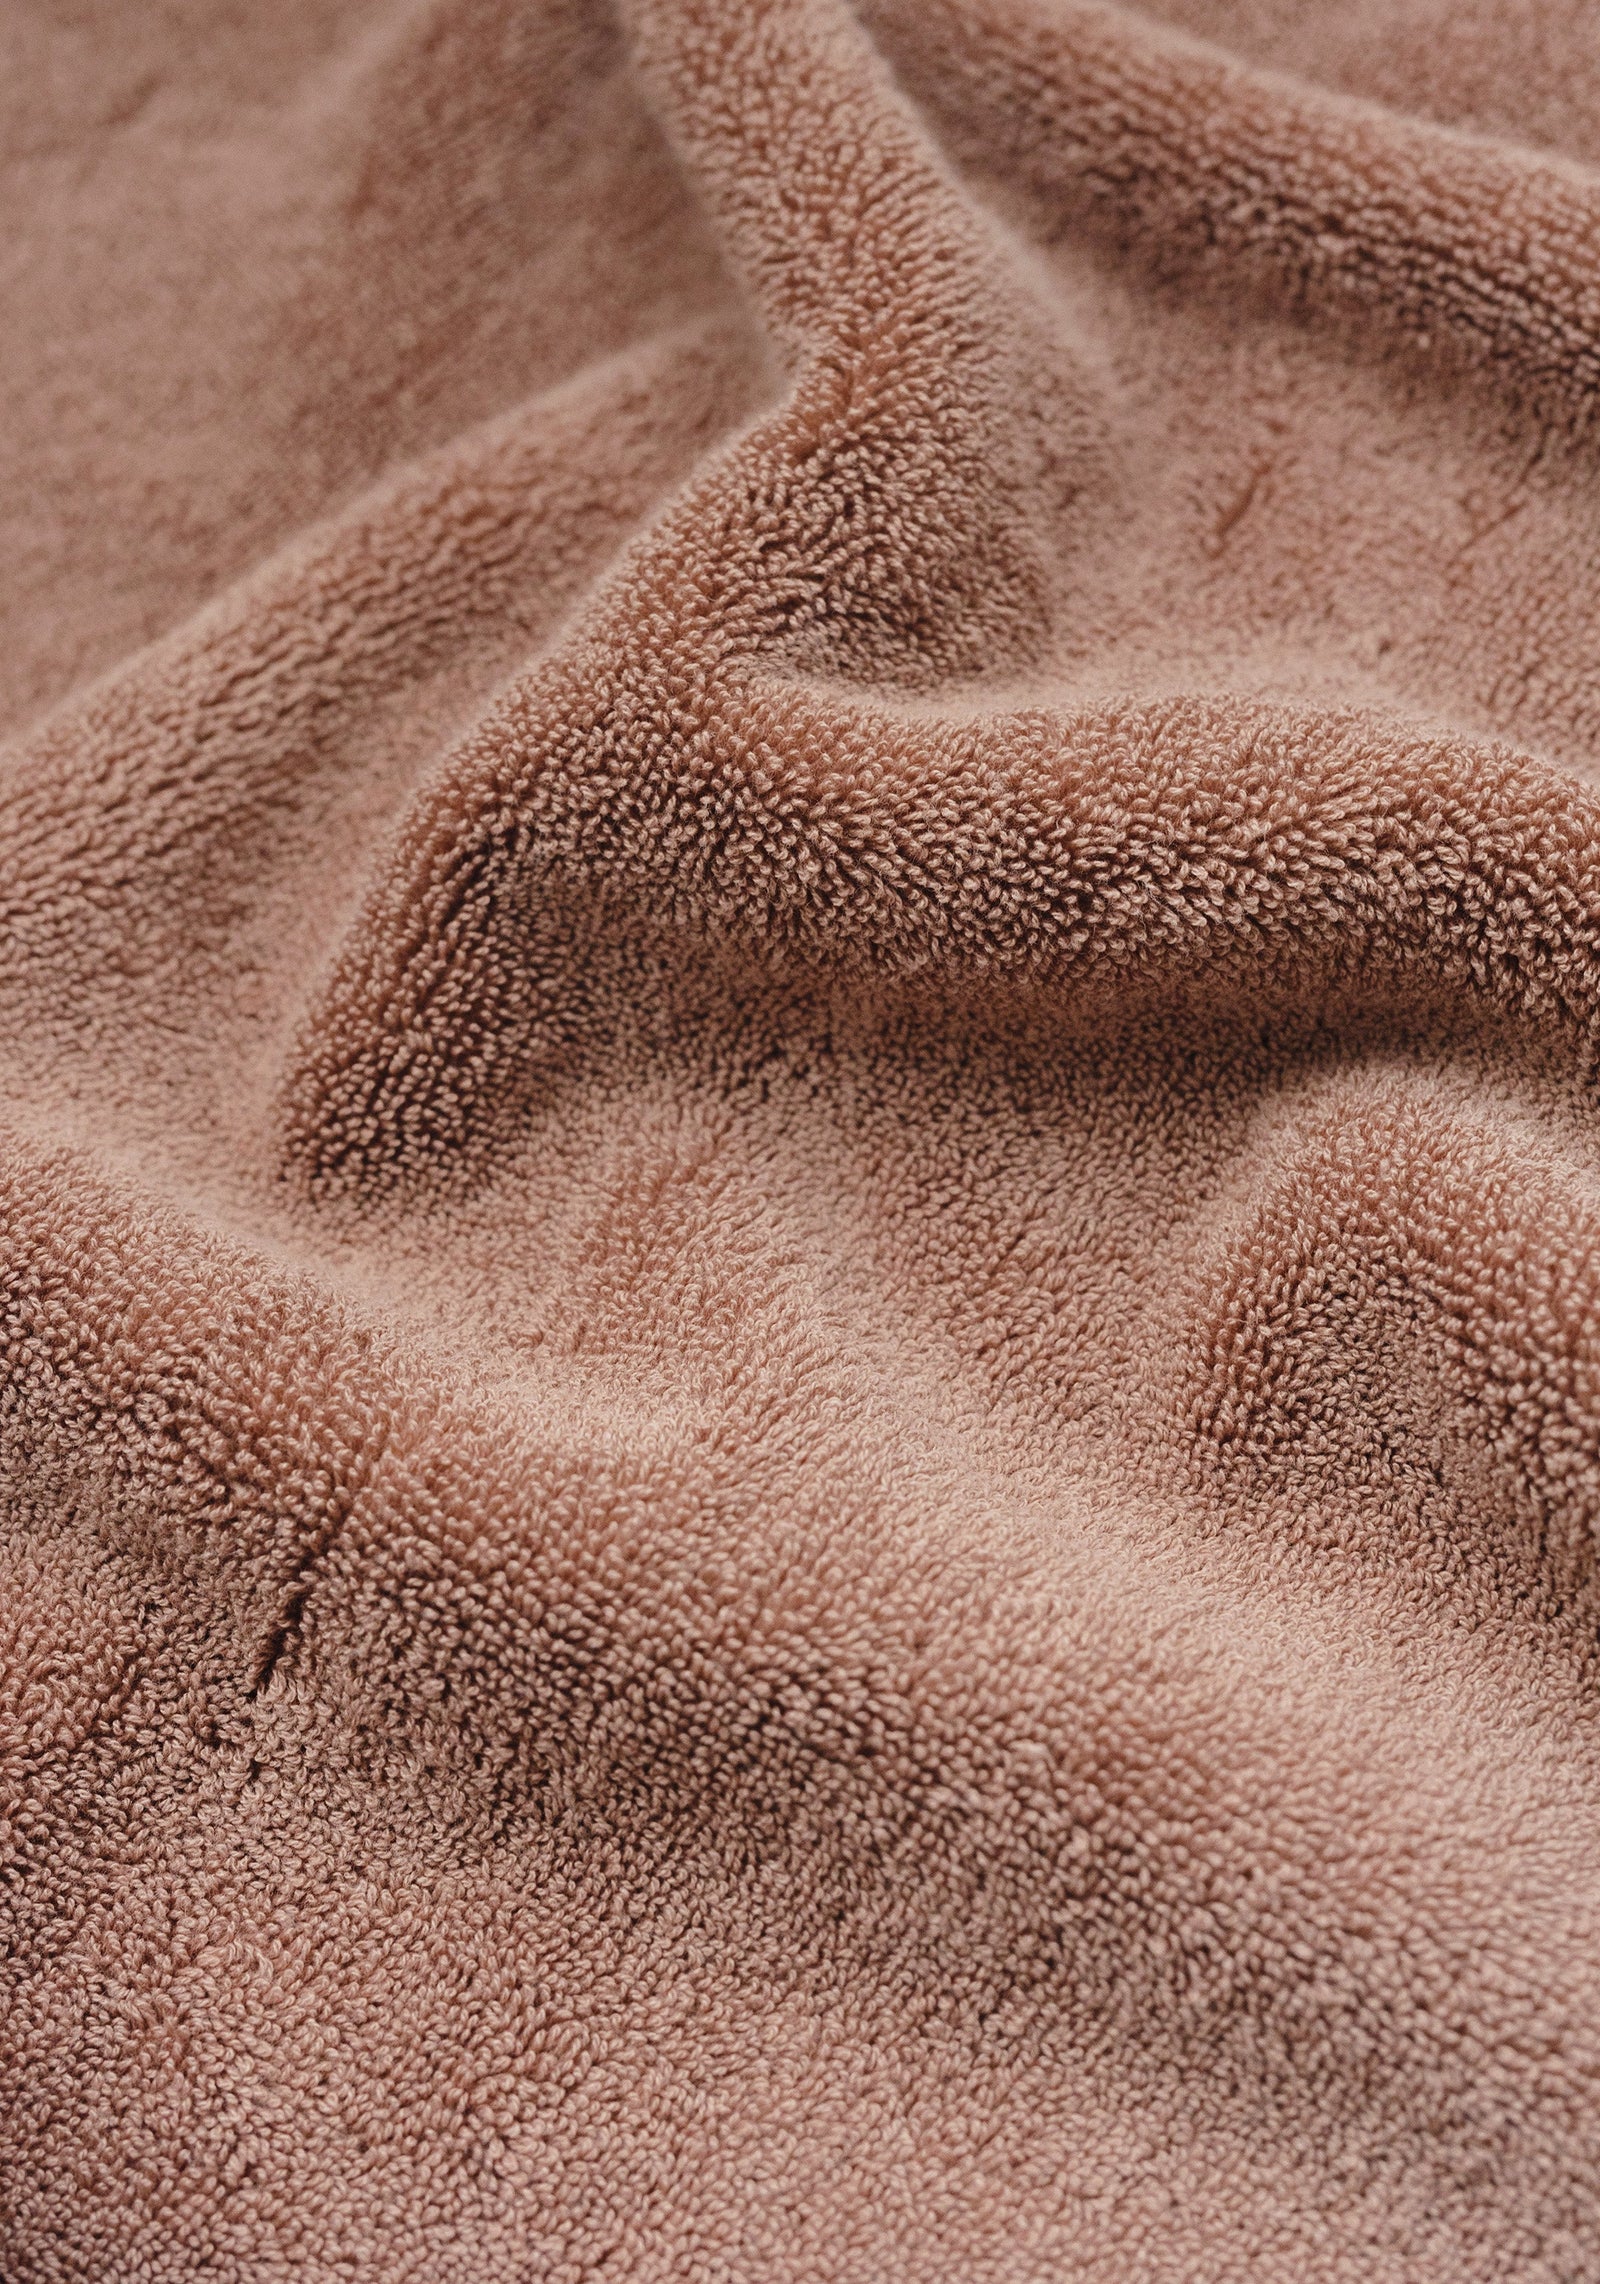 Premium Plush Bath Towel in the color Clay. Photo of Premium Plush Bath Towel taken as a close up only showing the Premium Plush Bath Towel's texture 